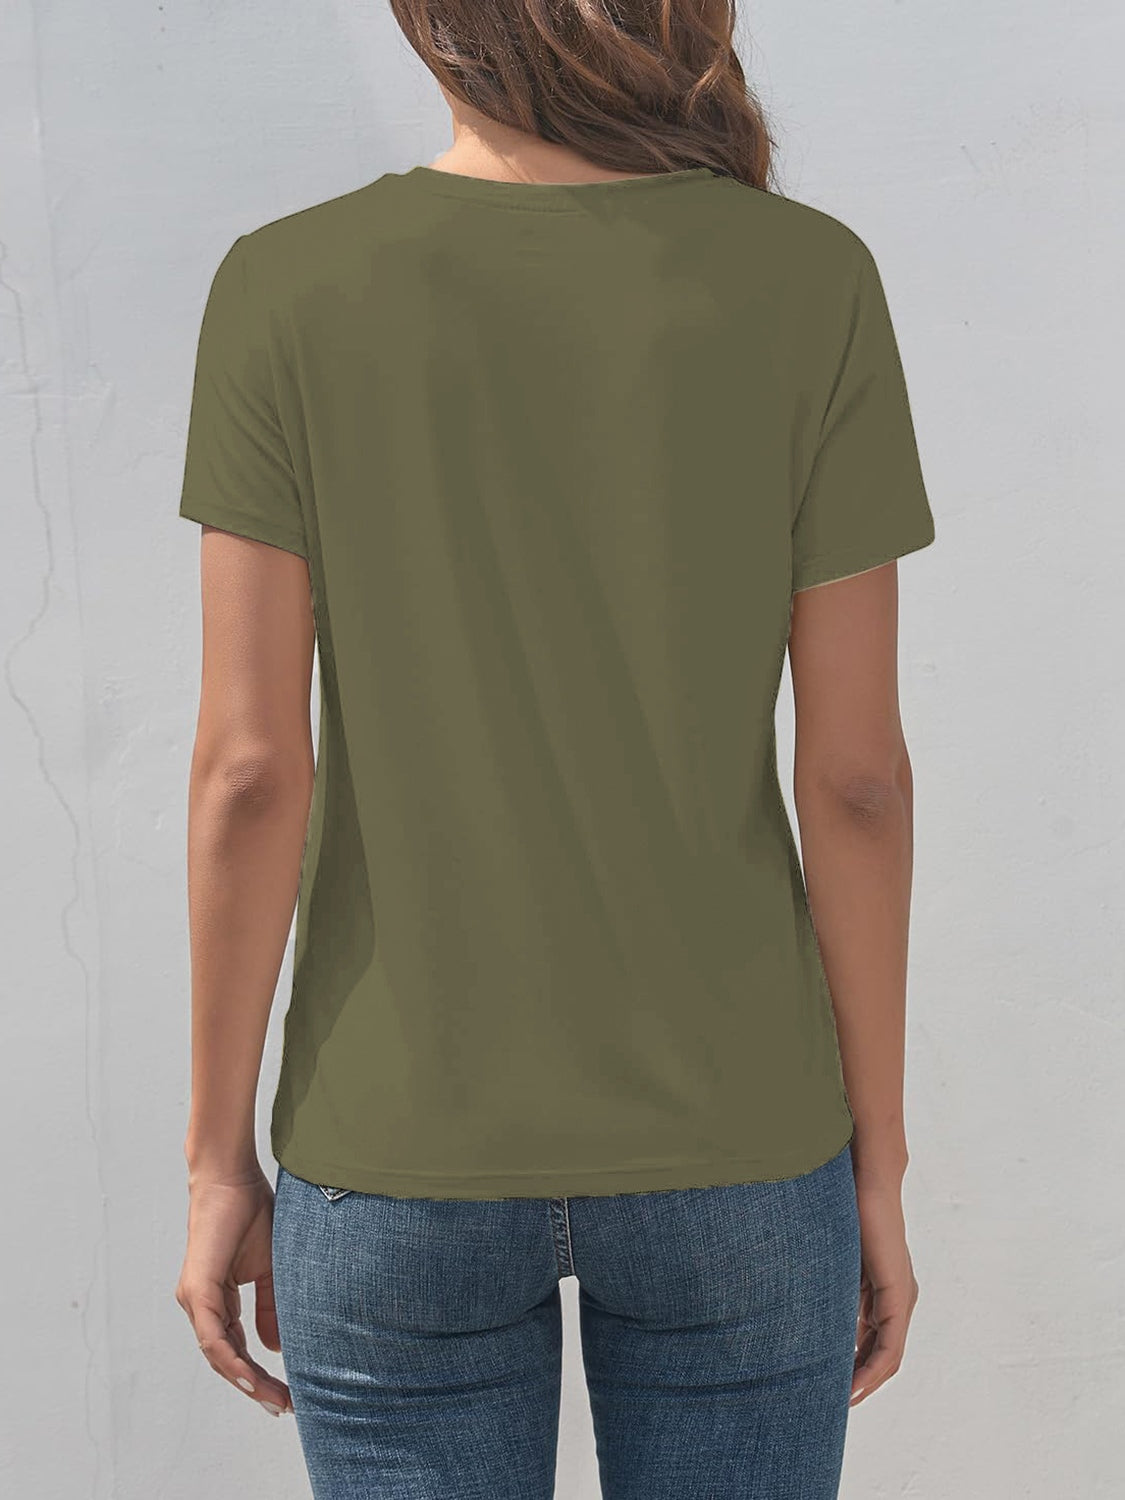 Graphic Round Neck Short Sleeve T-Shirt Trendsi